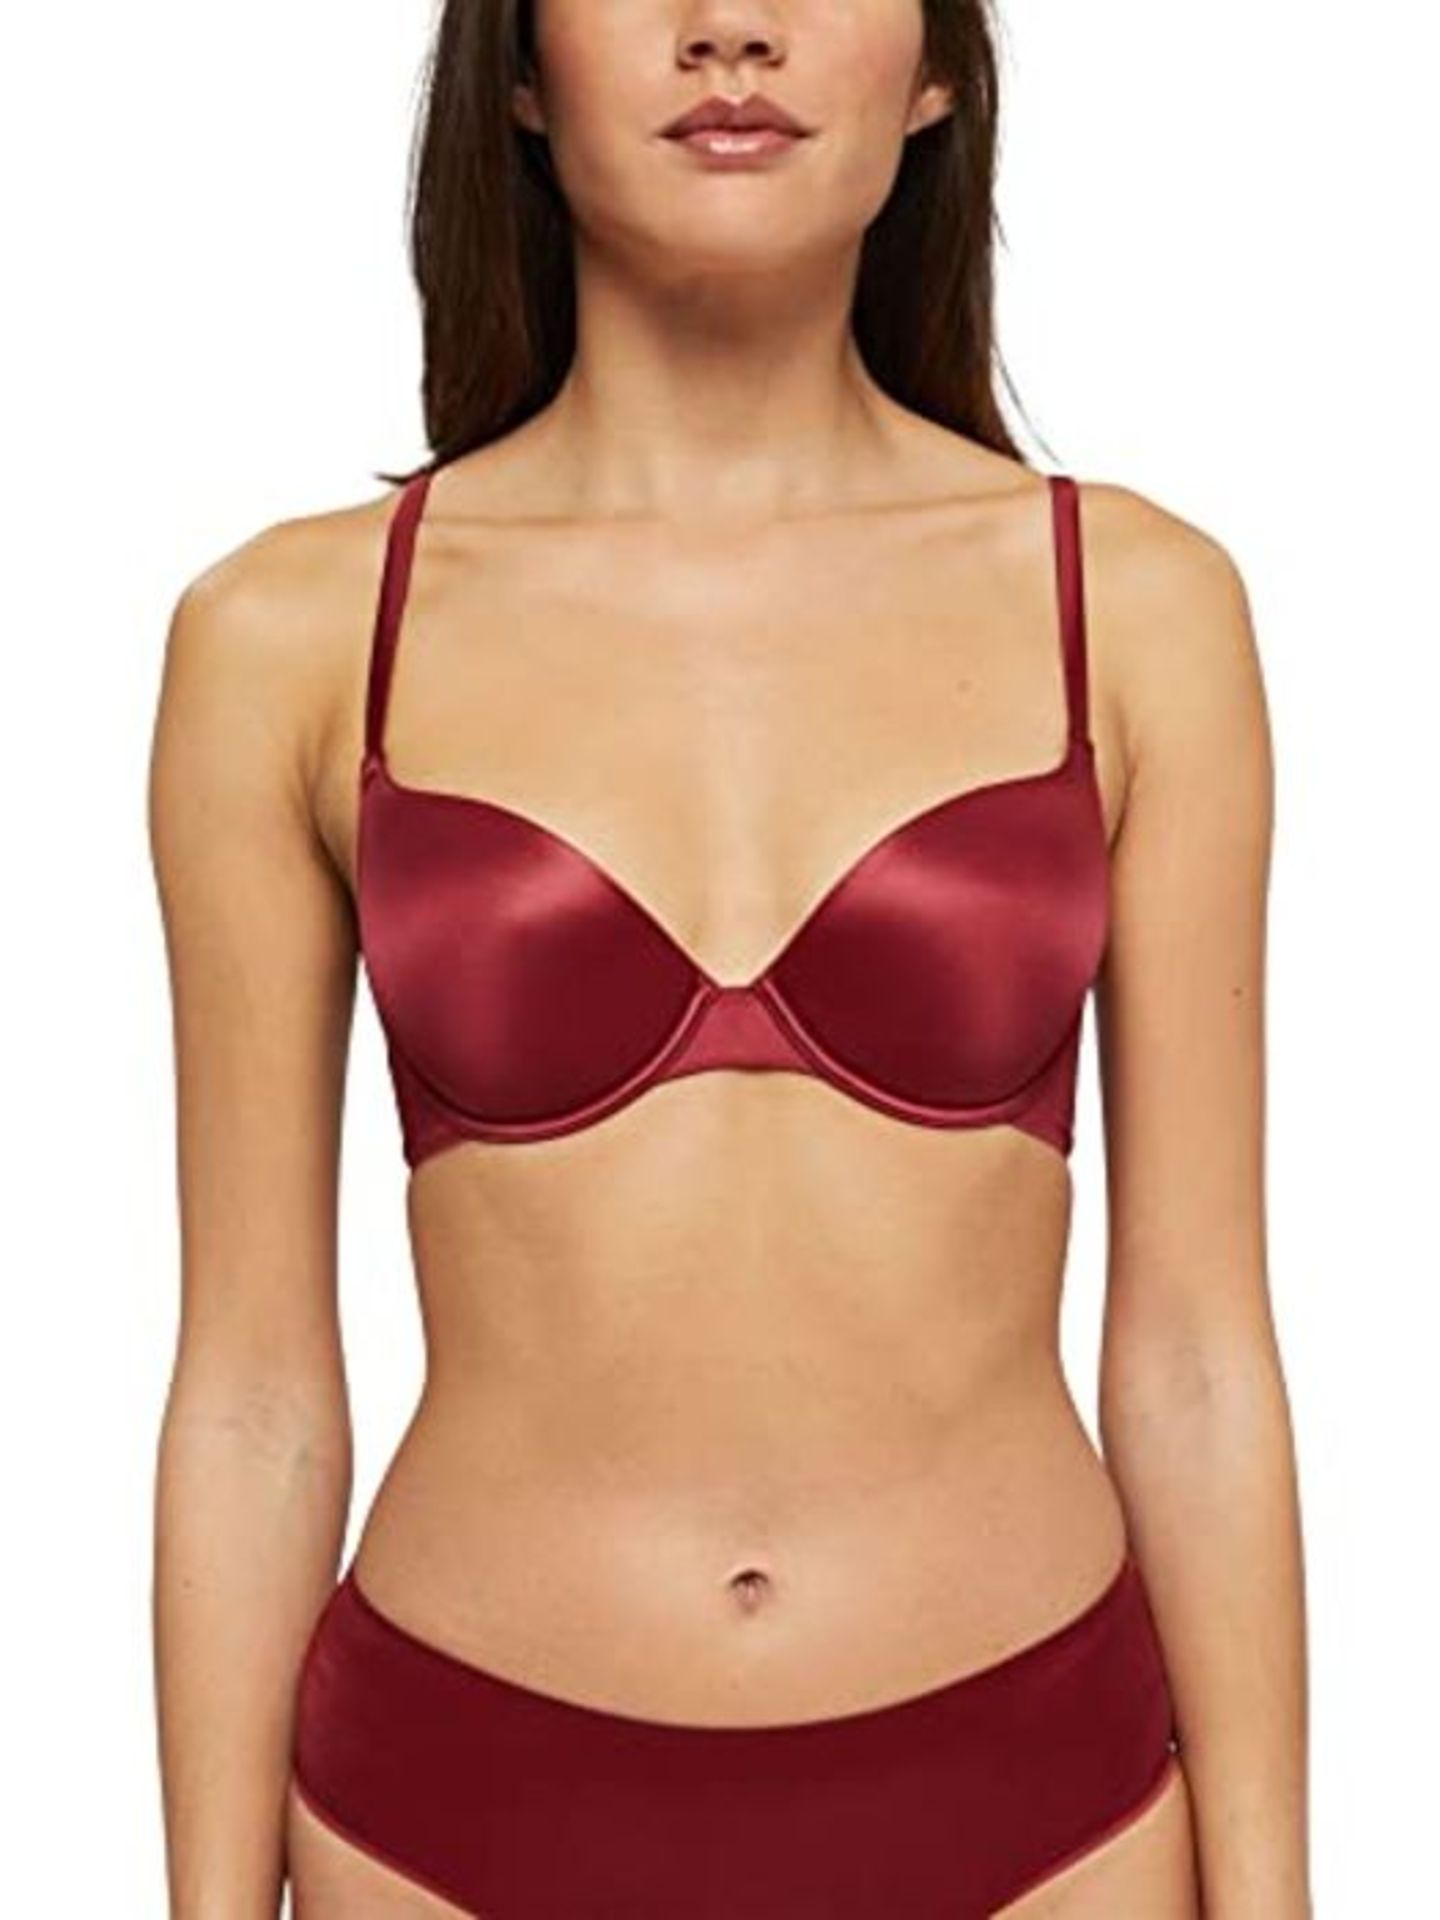 ESPRIT Women's Soft Shine Sexy Padded Bra, Cherry red, 40C